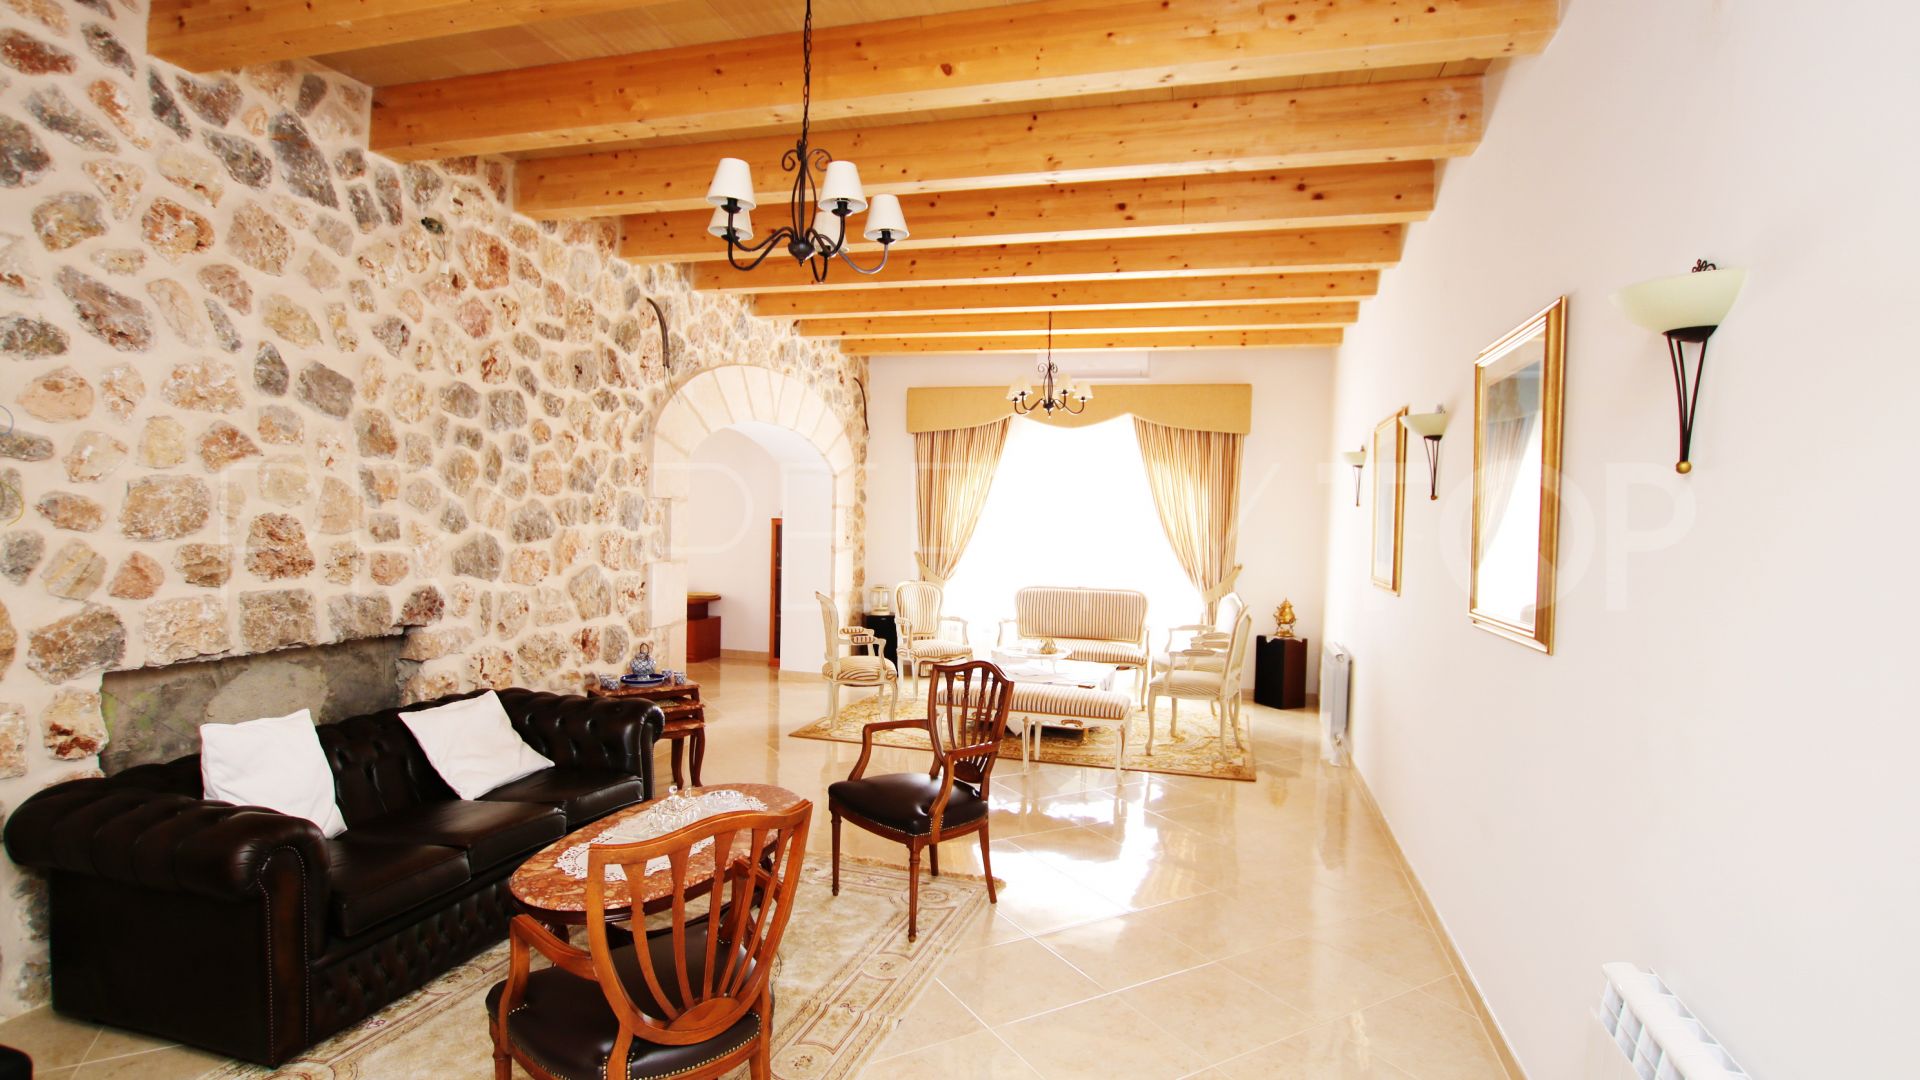 6 bedrooms Palma de Mallorca villa for sale